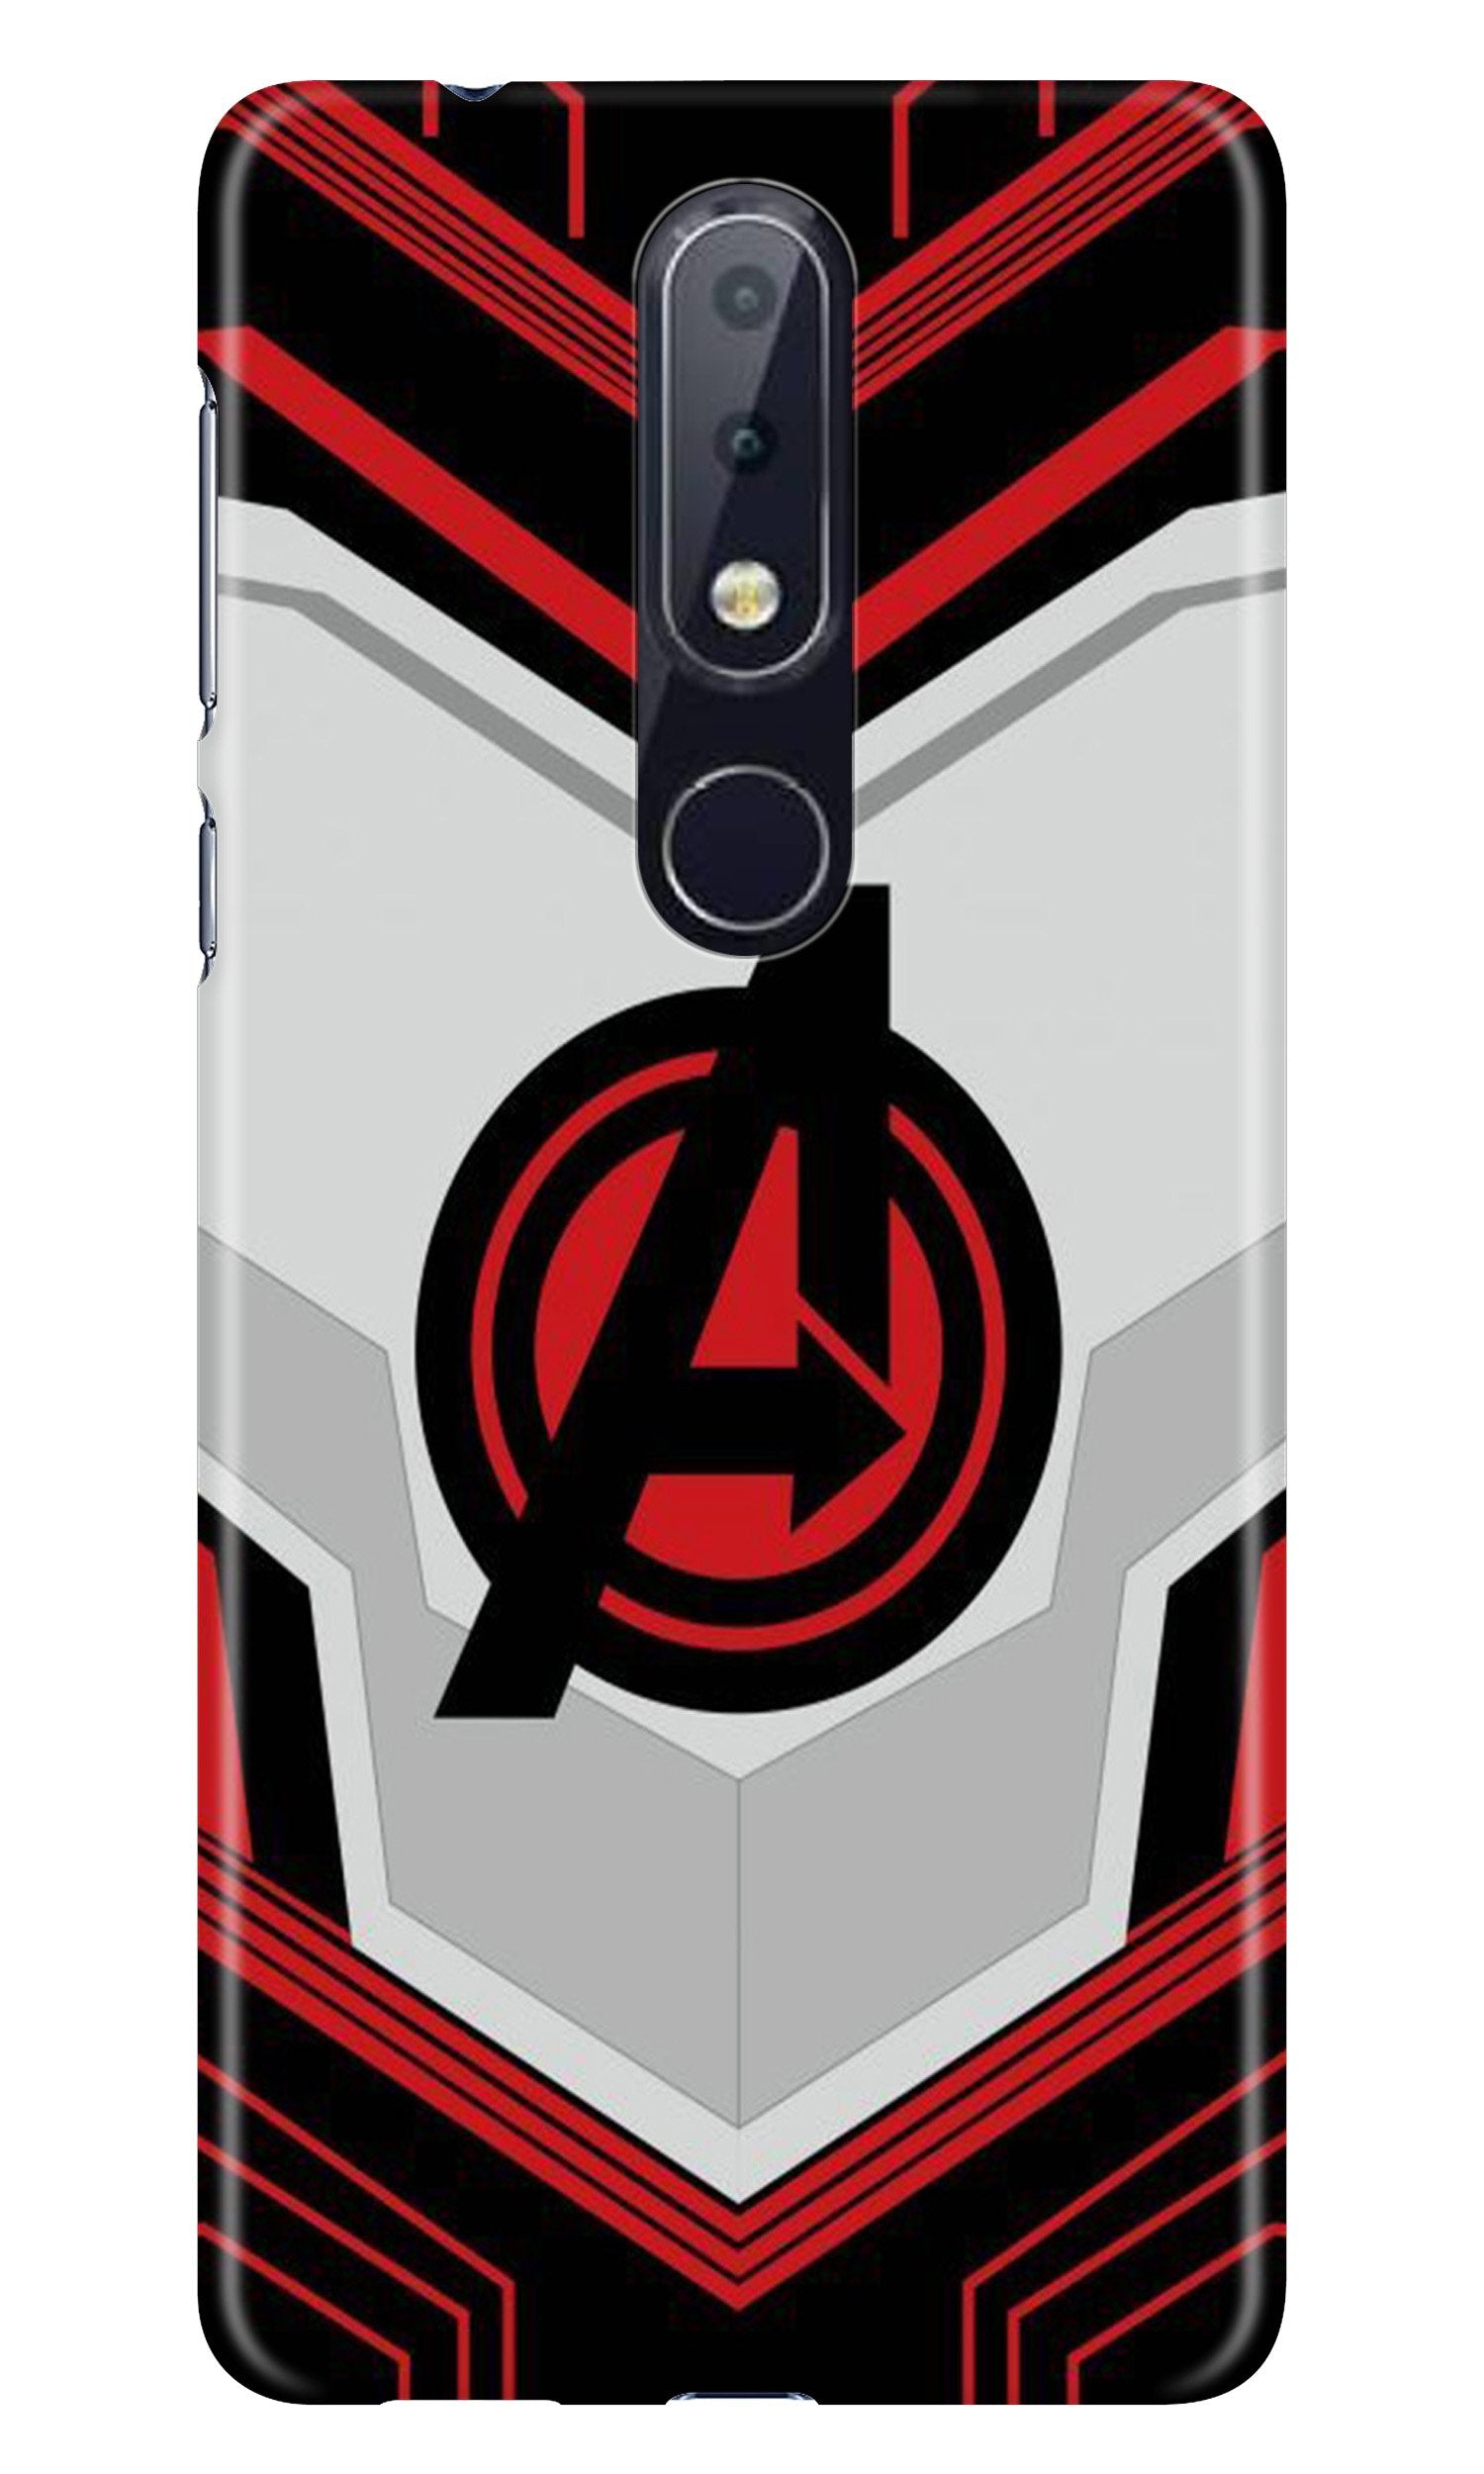 Avengers2 Case for Nokia 7.1 (Design No. 255)